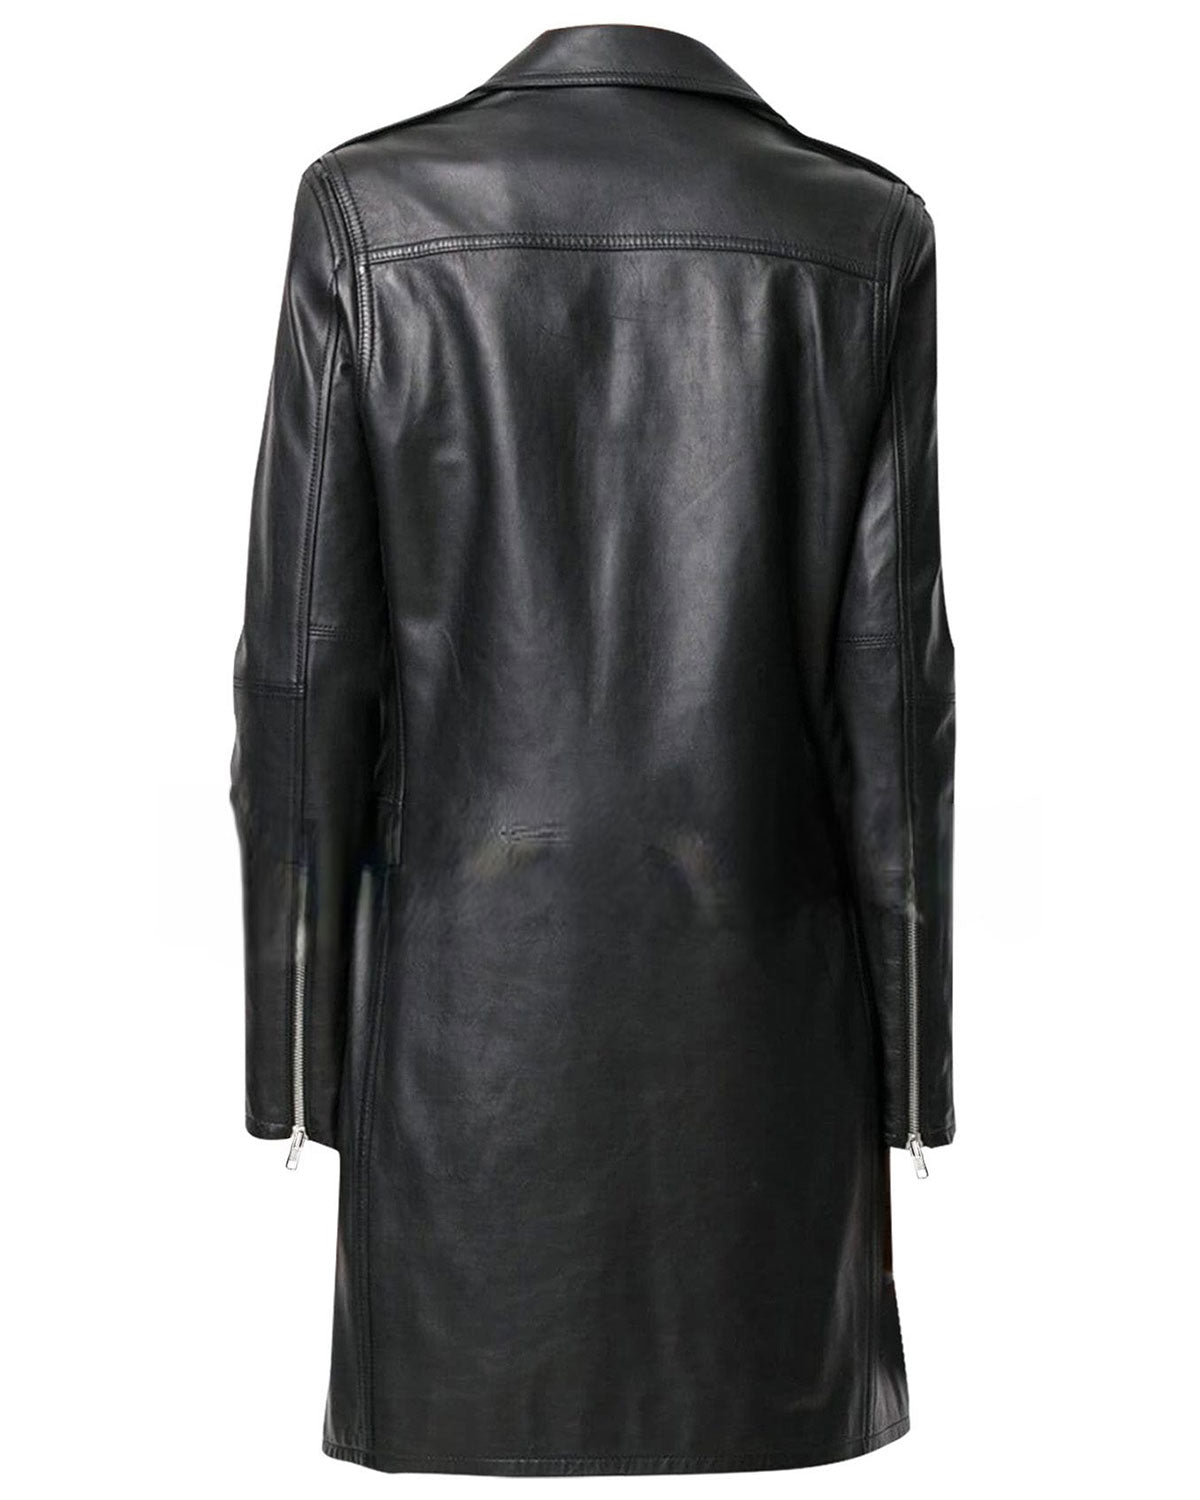 Elite Women’s Slim Fit Black Leather Long Coat